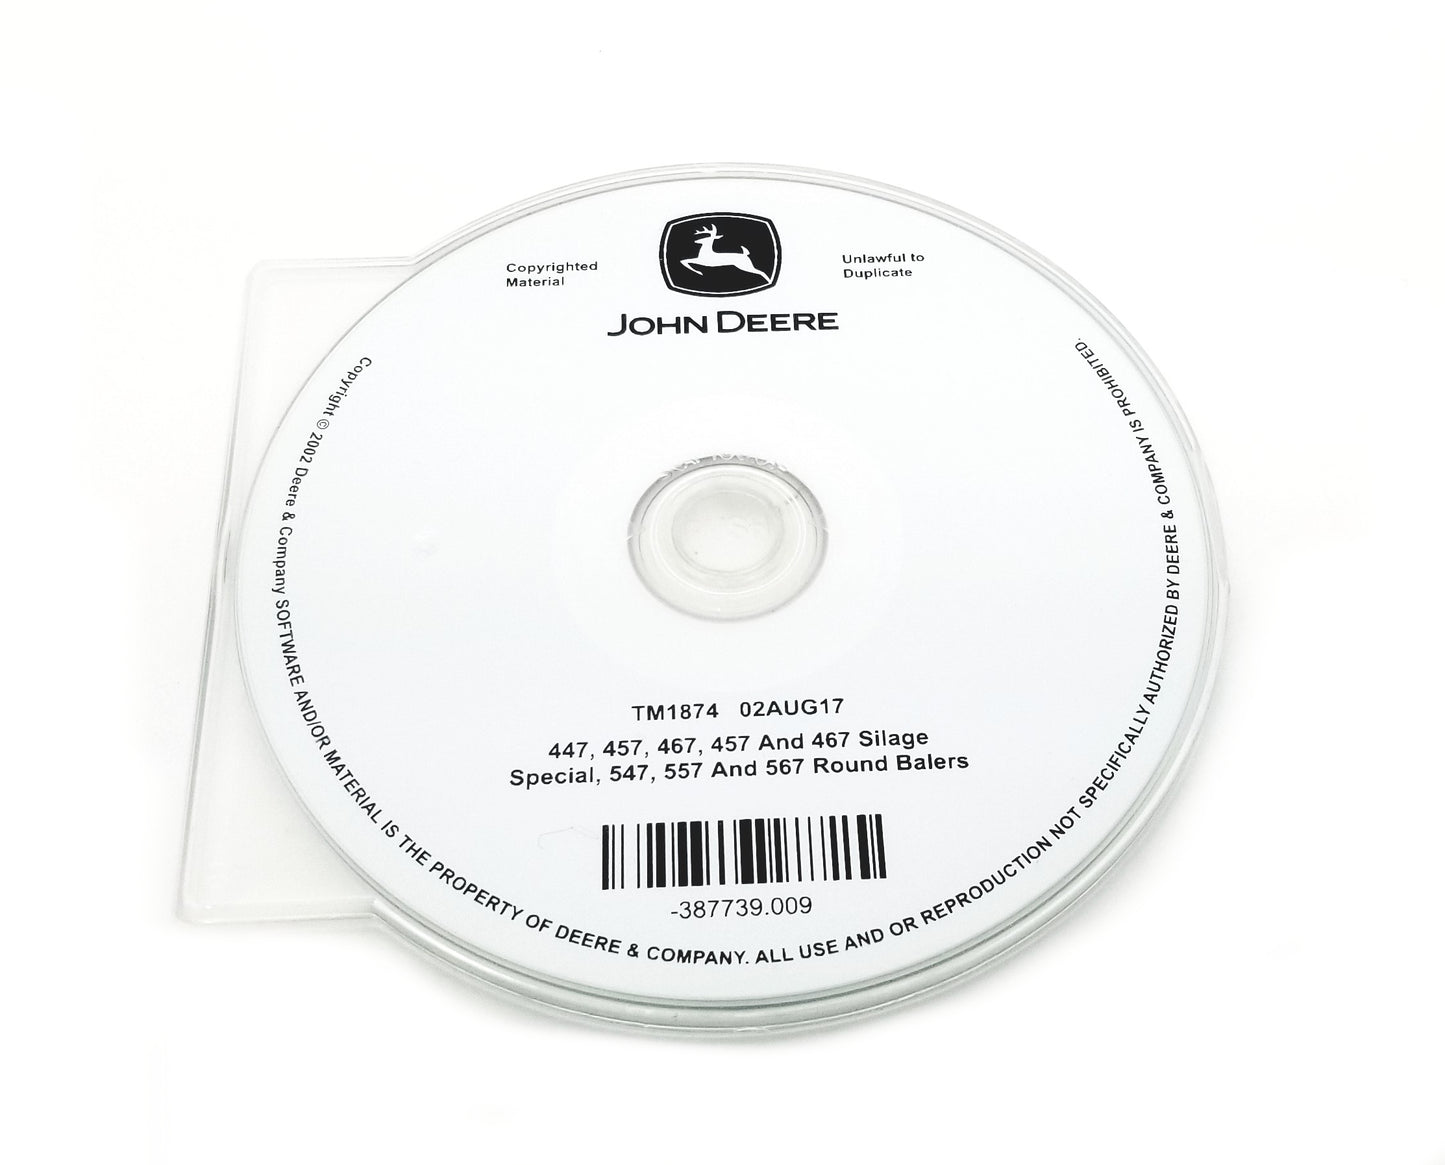 John Deere 447/457/467 & SIL.S/ 547/557/567 Round BALERS (-300000) Technical Manual CD - TM1874CD